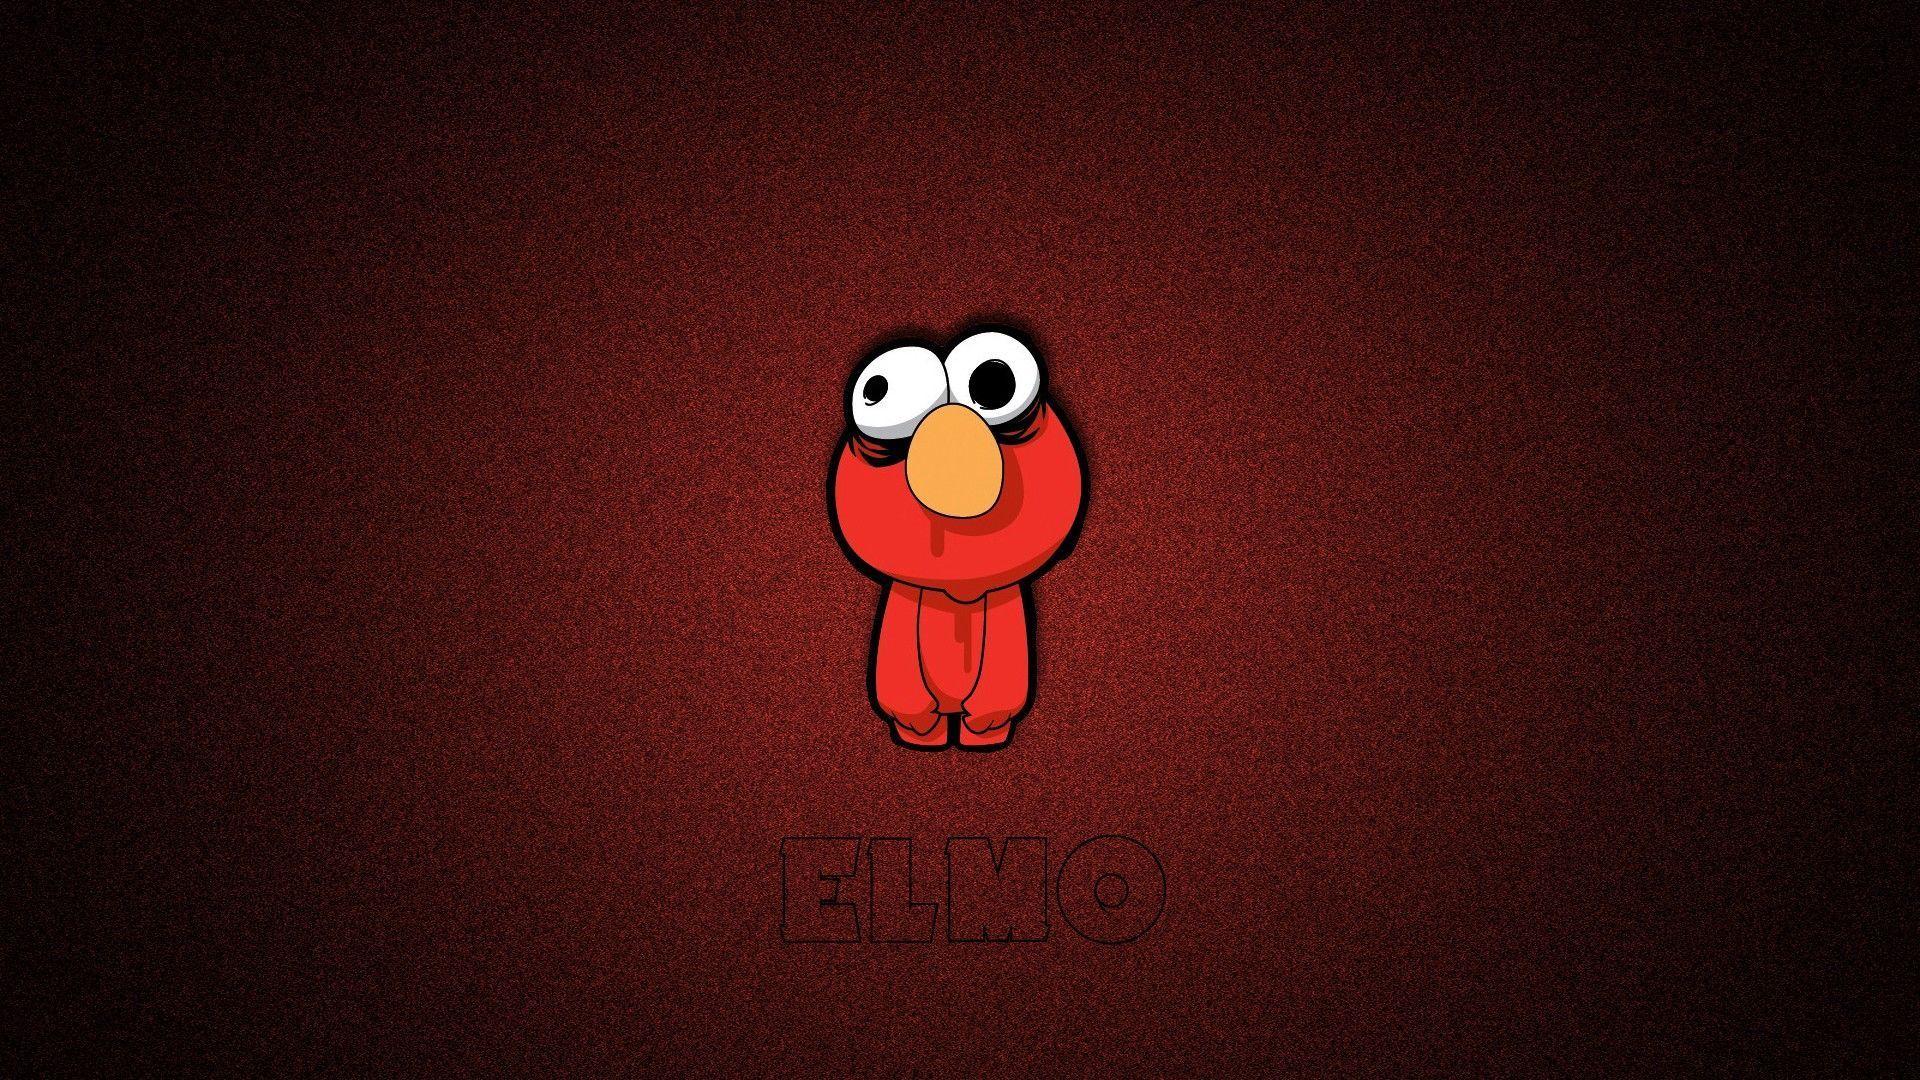 Elmo image Elmo wallpaper and background photo 1024×768 Elmo